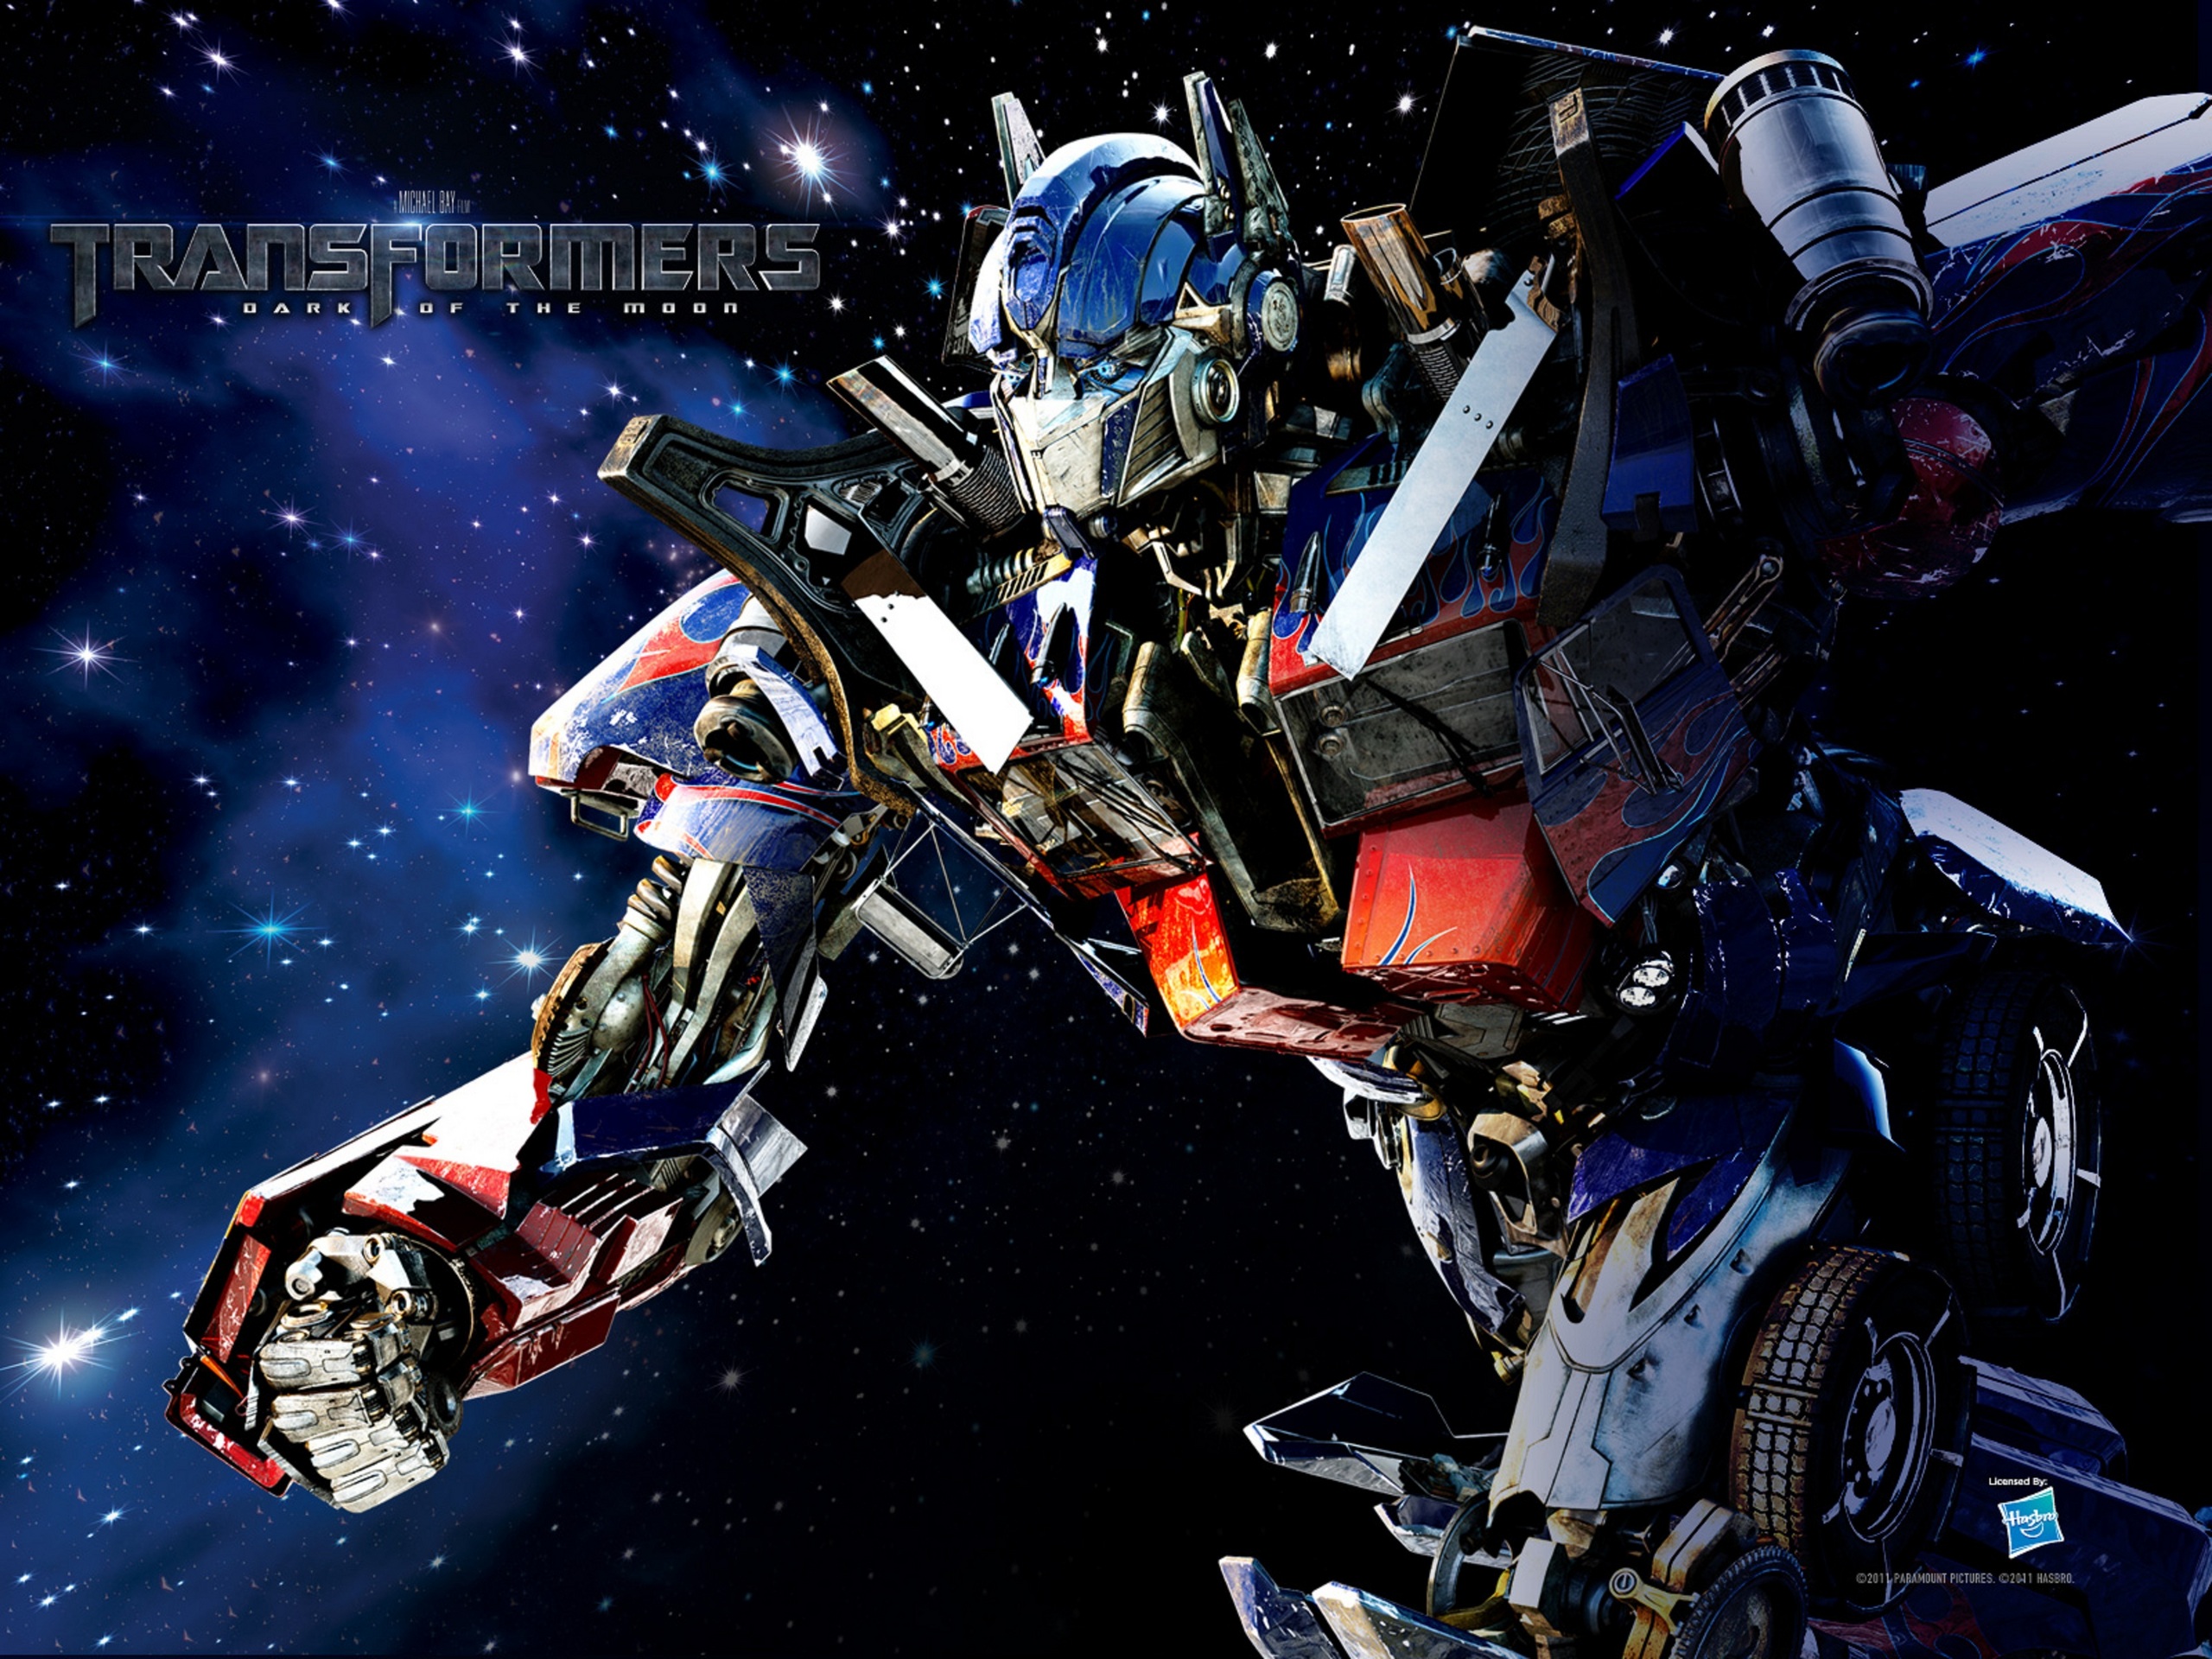 Transformers:Dark of the Moon - Transformers Dark Of The Moon ...